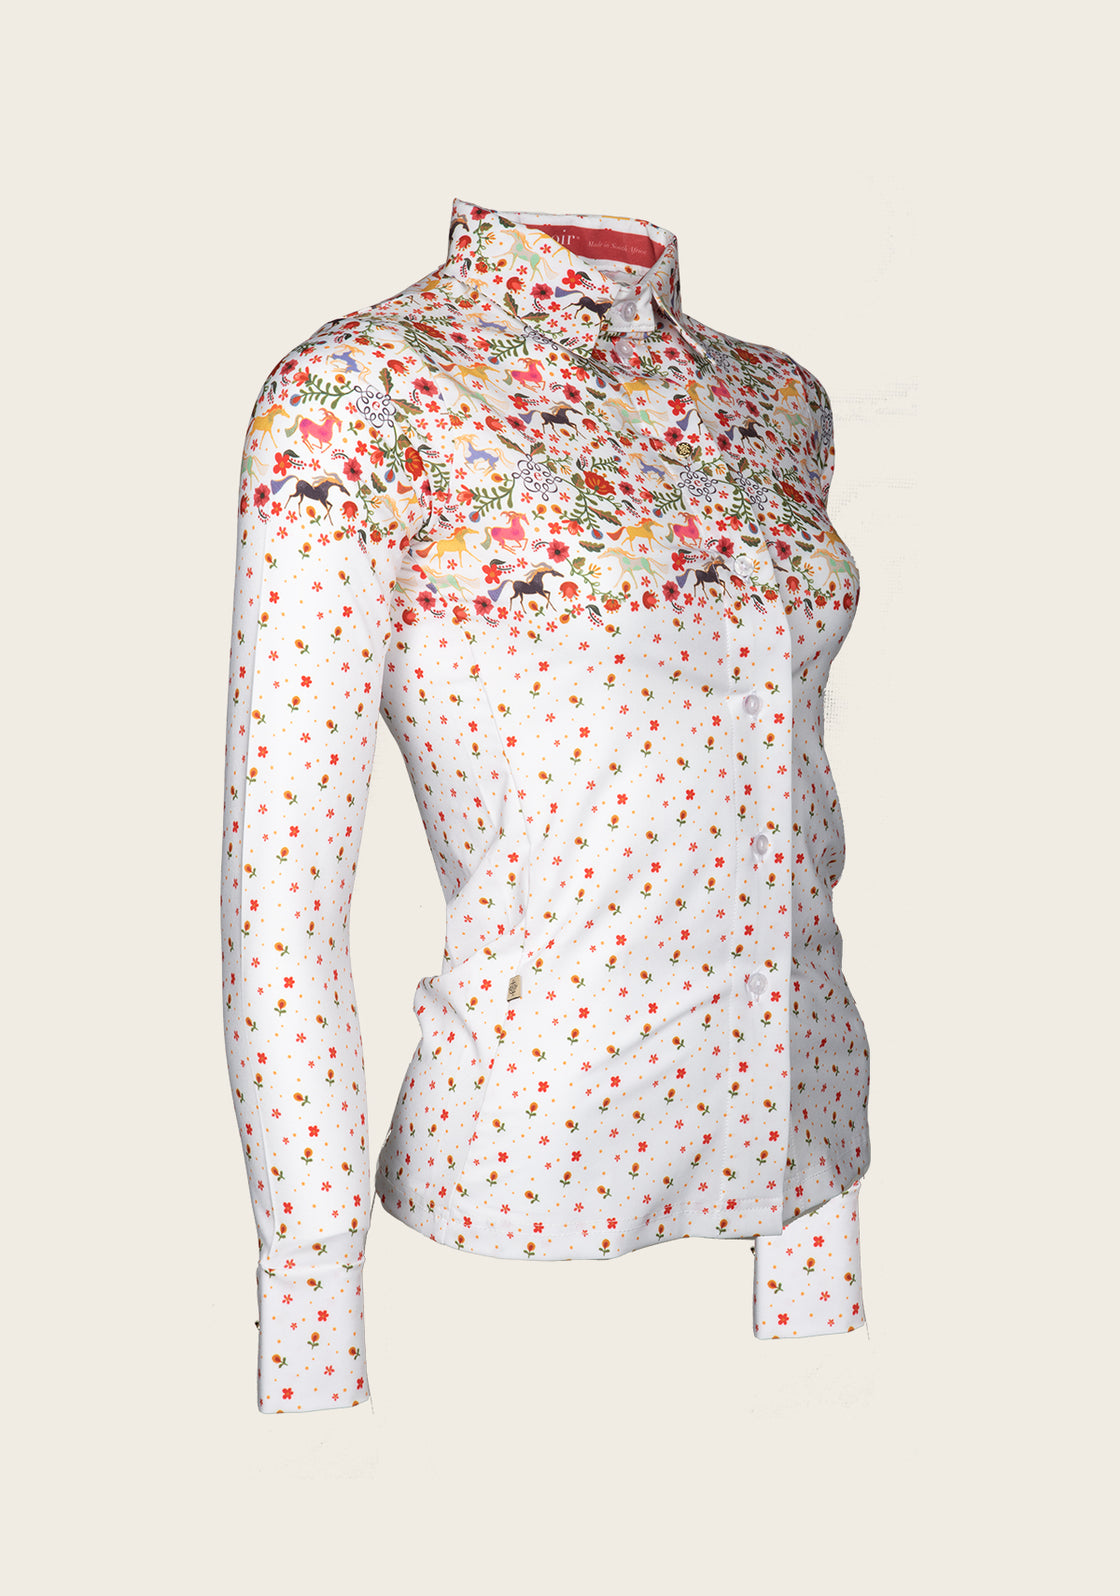 Joie White Floral Ladies’ Button Shirt